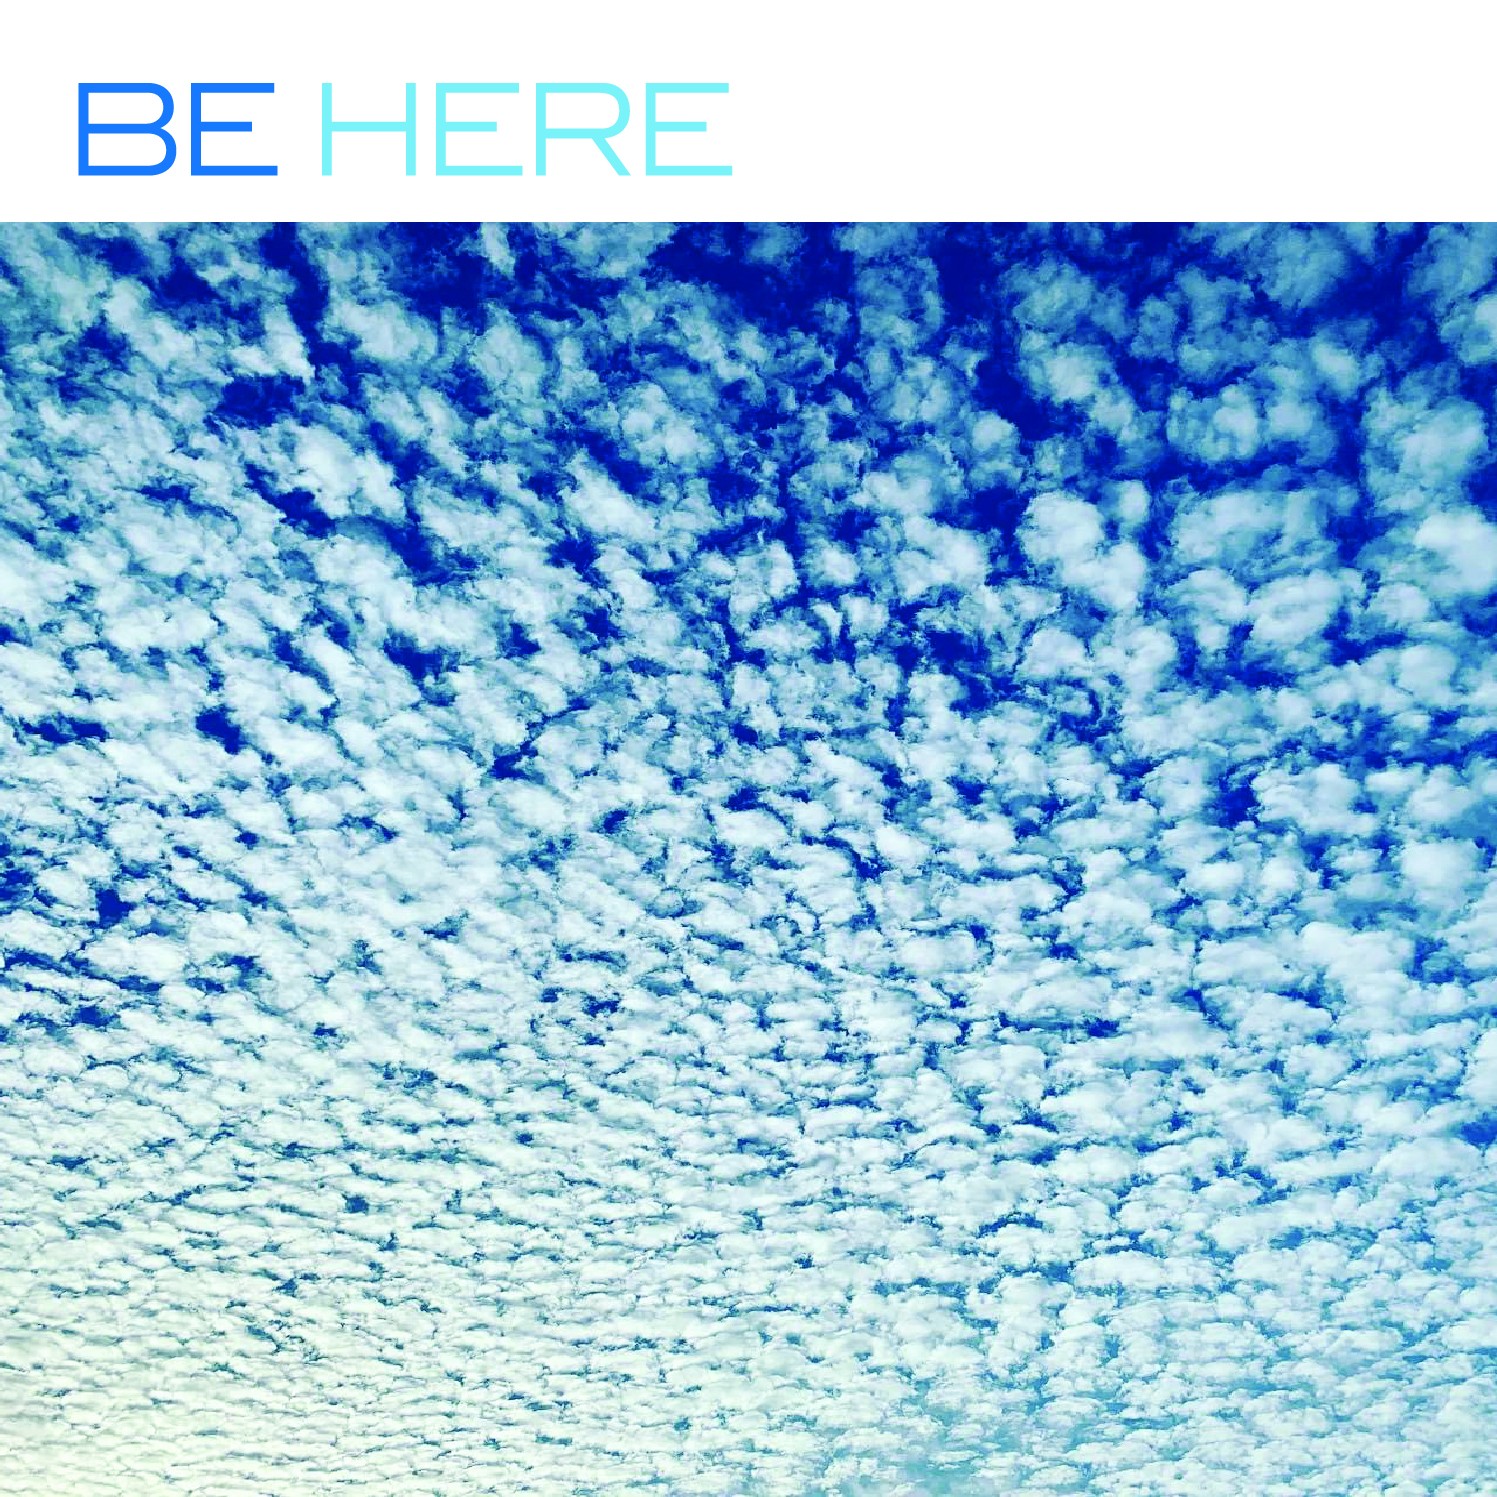 Be ‘Here’ album artwork